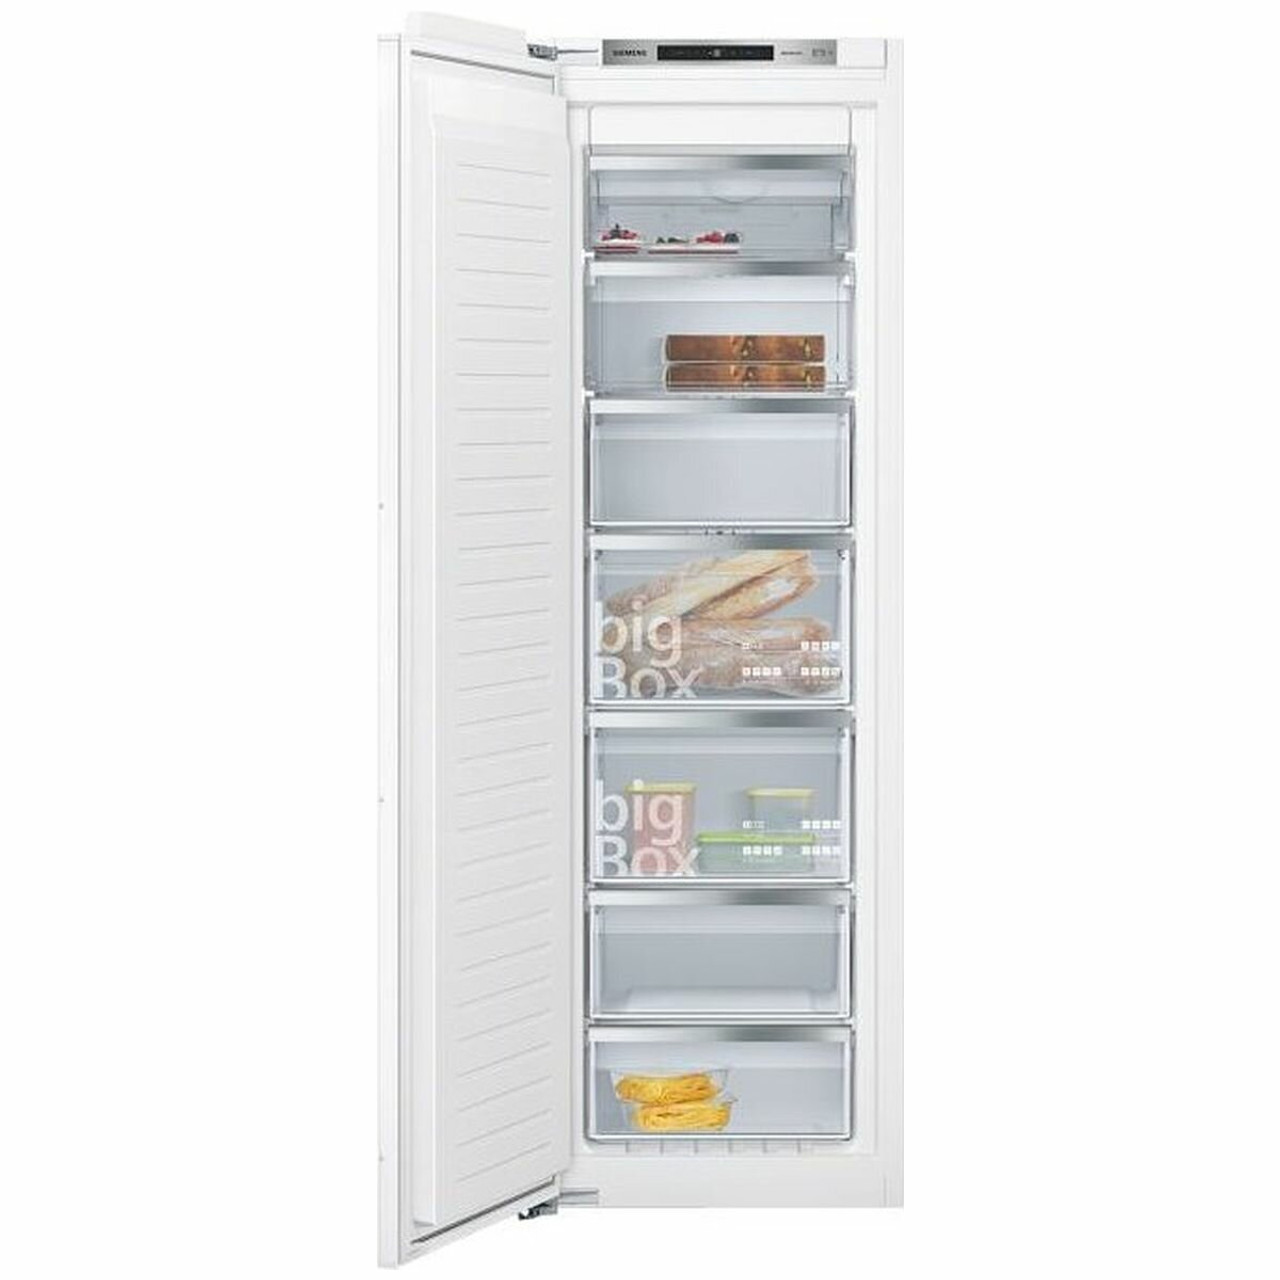 GI81NAC30A  - iQ500 221L Integrated Freezer